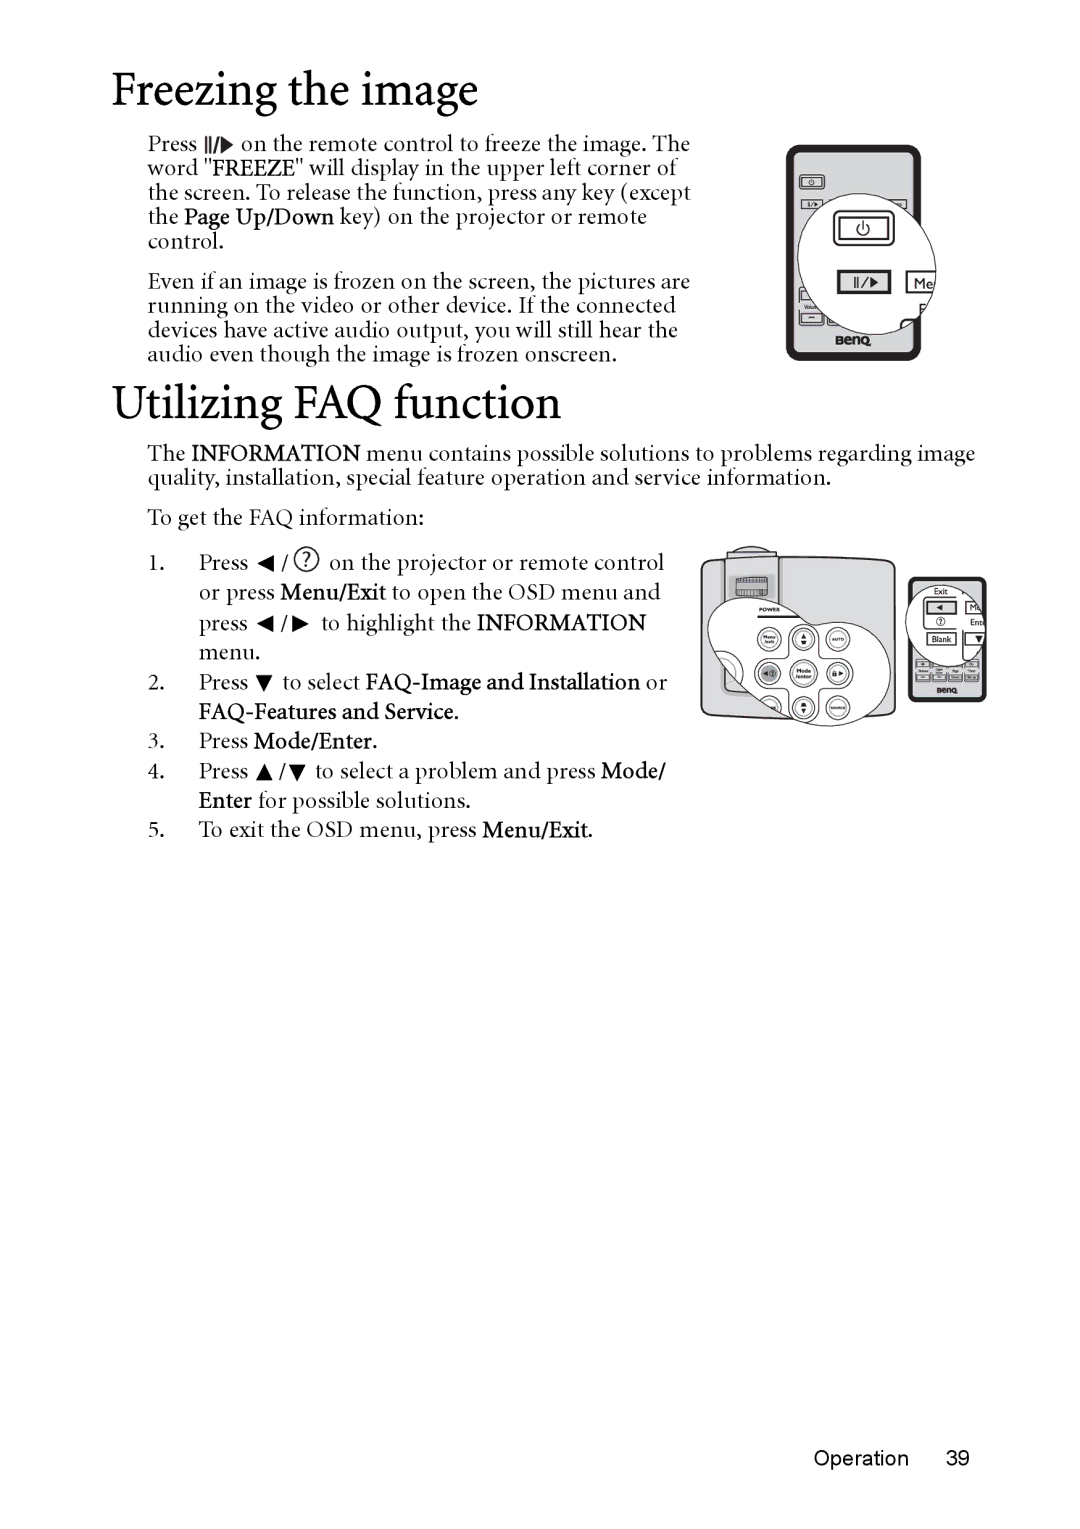 BenQ MP515 ST, MP525 ST user manual Freezing the image, Utilizing FAQ function, Press Mode/Enter 